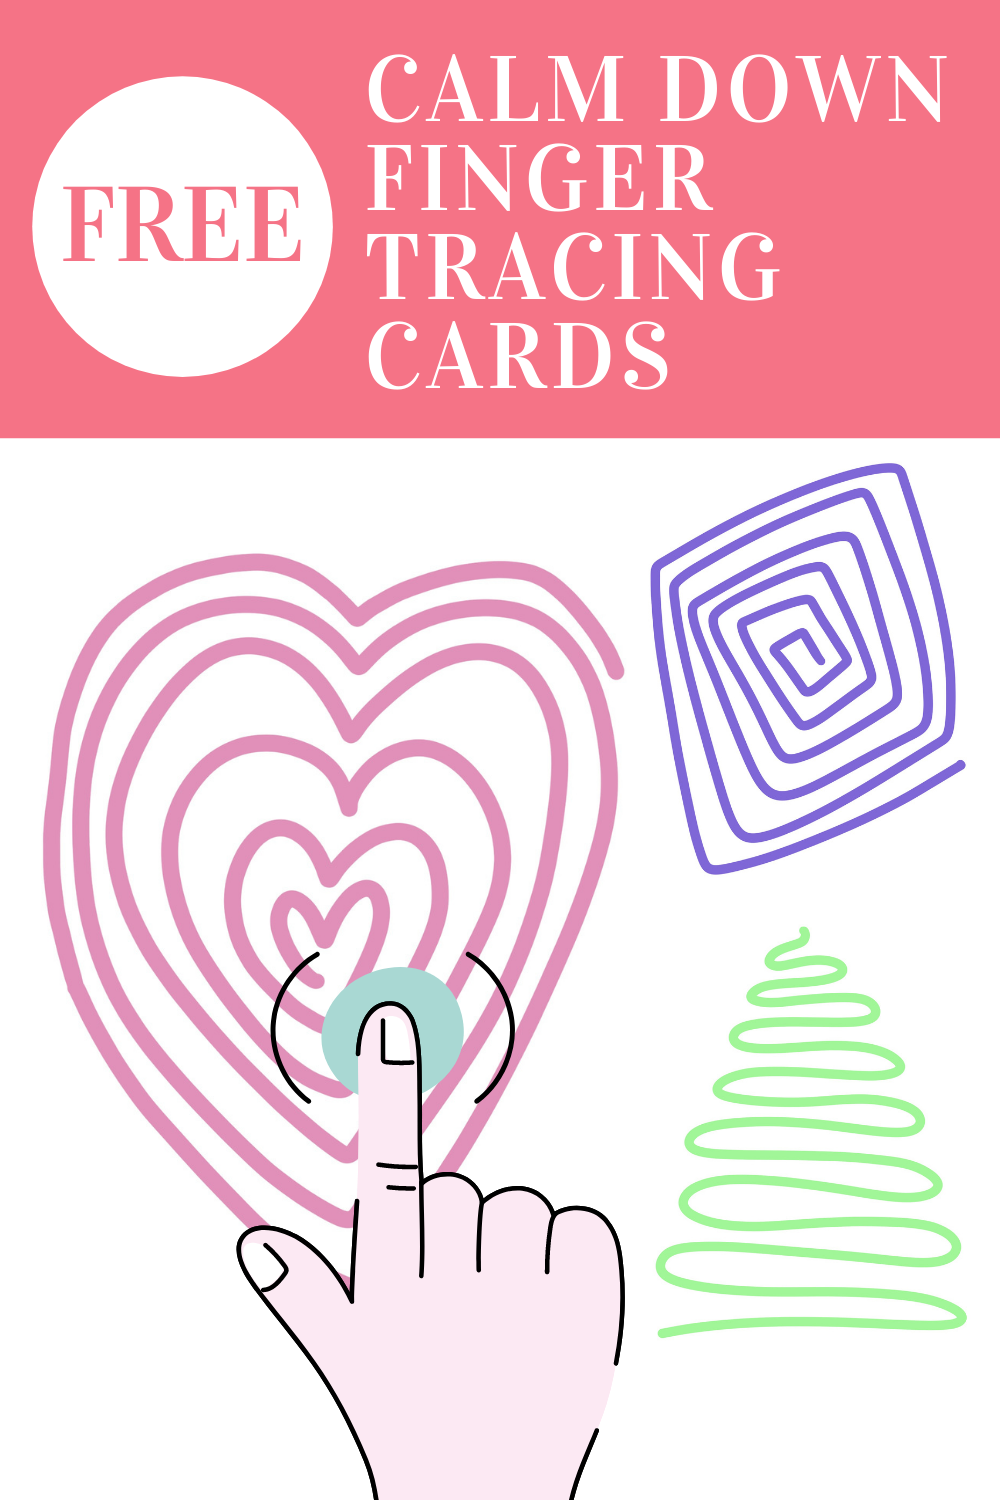 free-finger-tracing-calm-down-cards-lemon-kiwi-designs